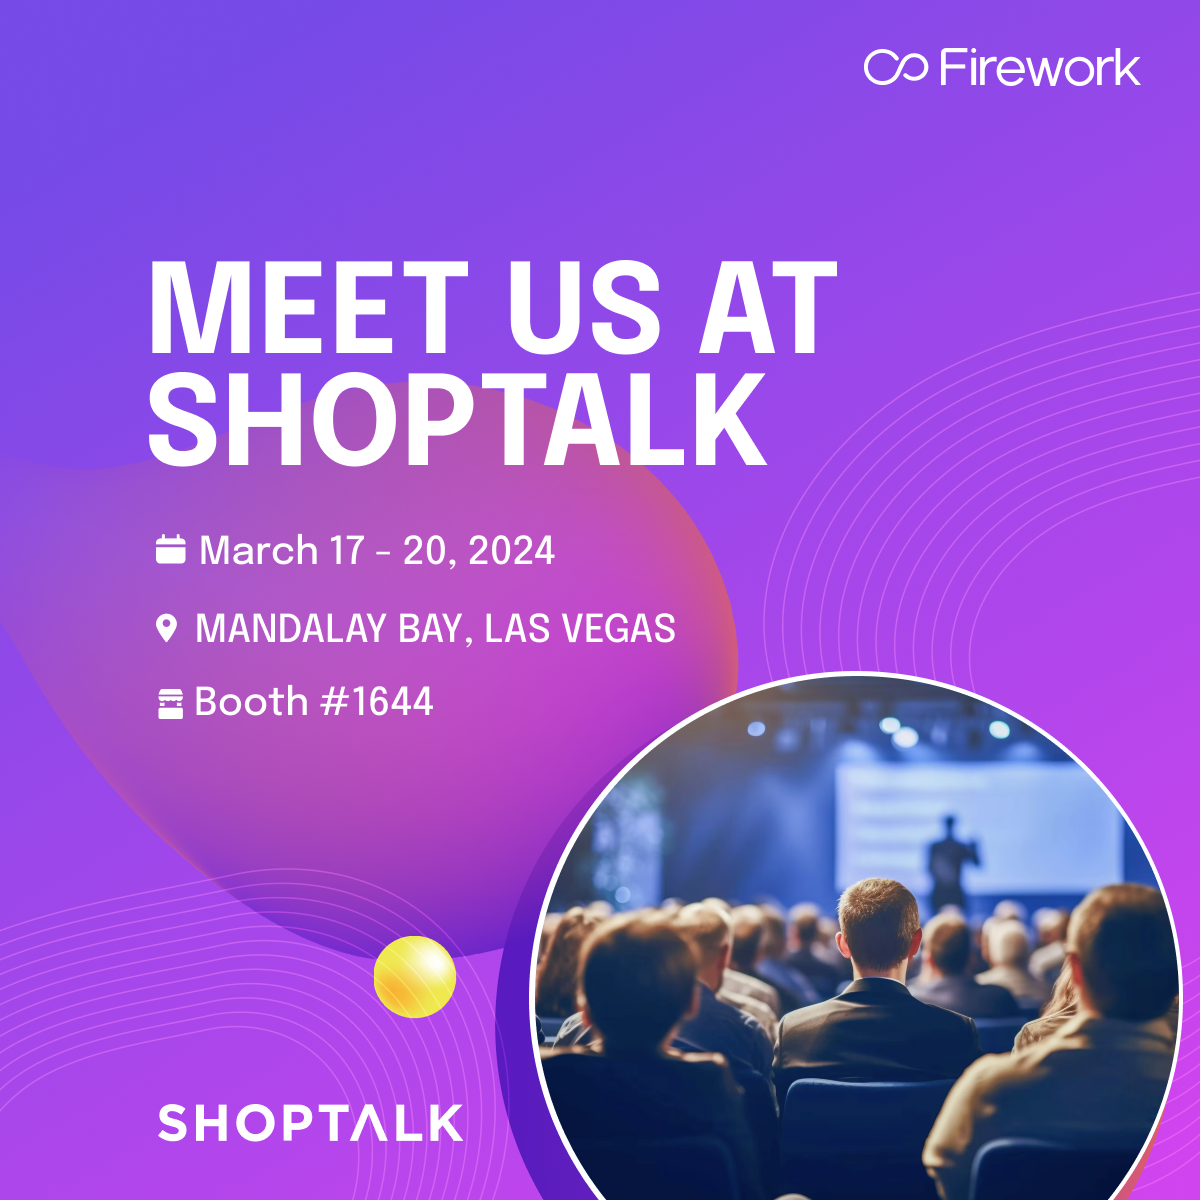 Meet us at Shoptalk